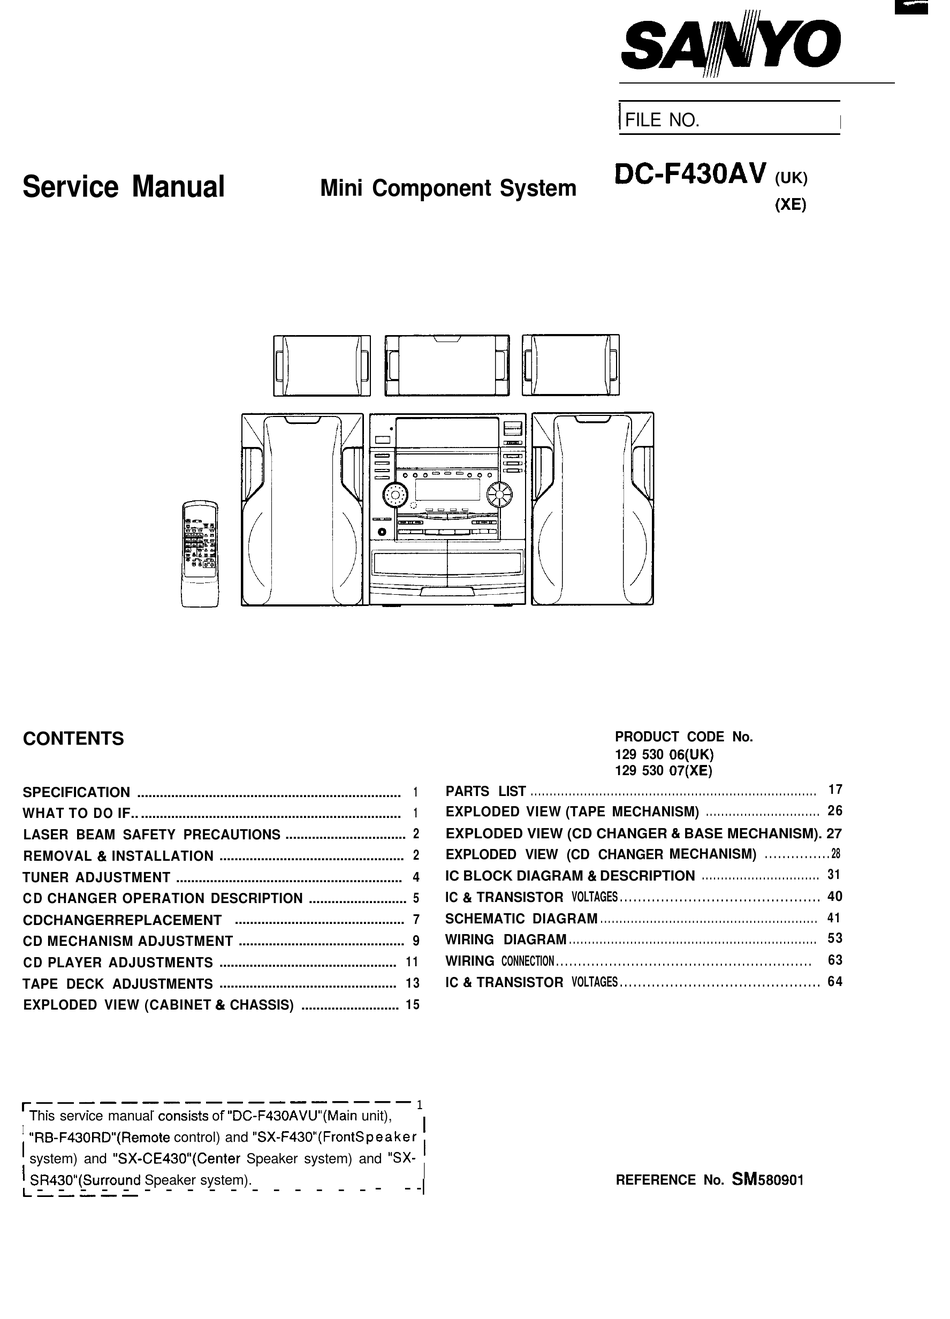 Sanyo Dc F430av Service Manual Pdf